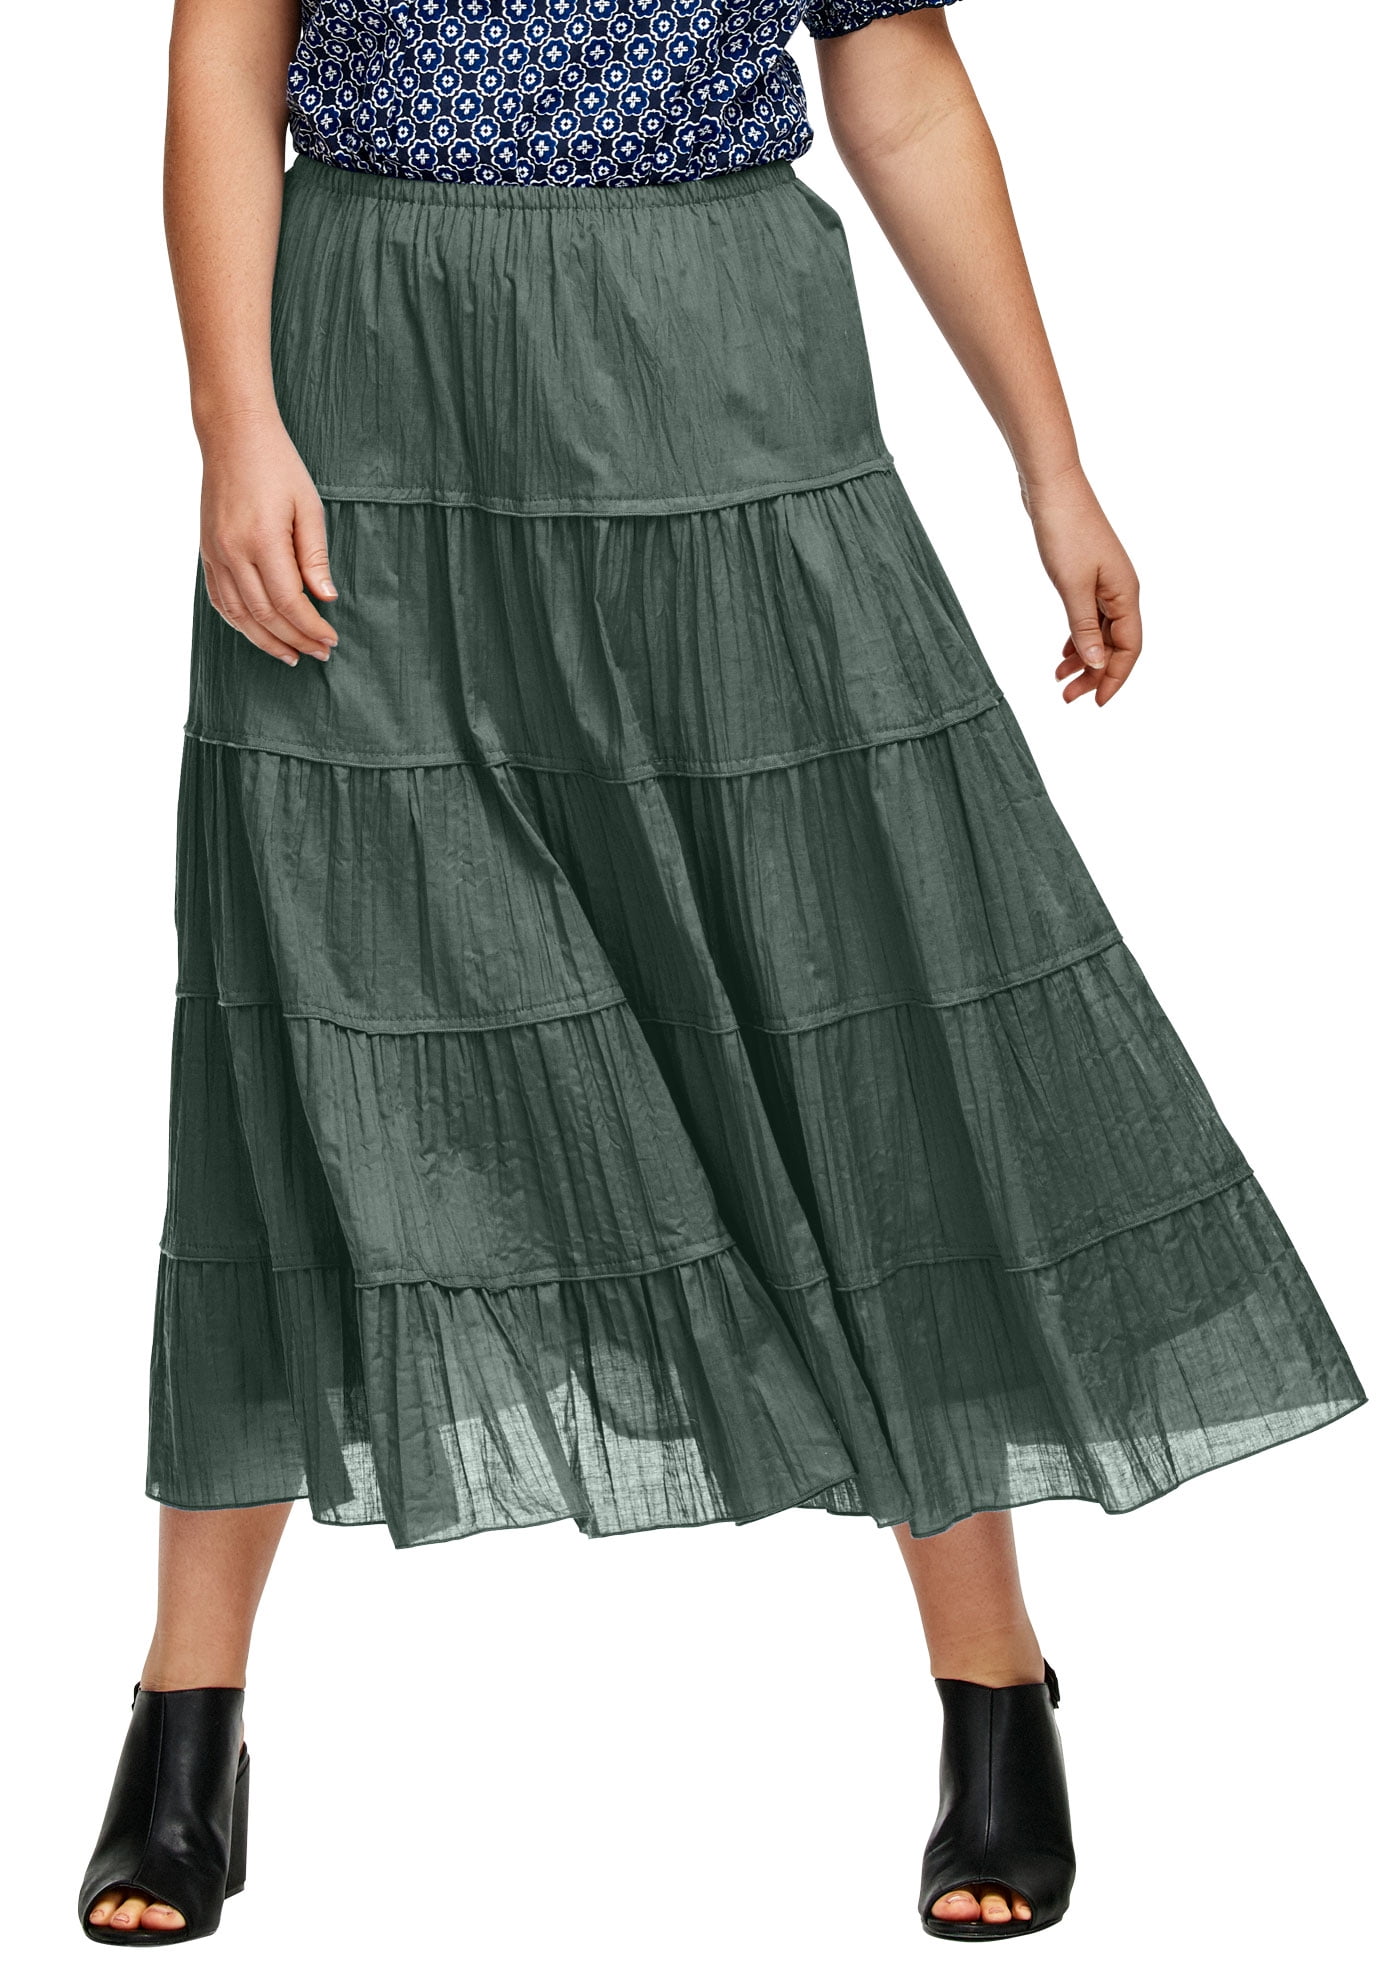 Ellos - Ellos Plus Size Crinkled Tiered Skirt - Walmart.com